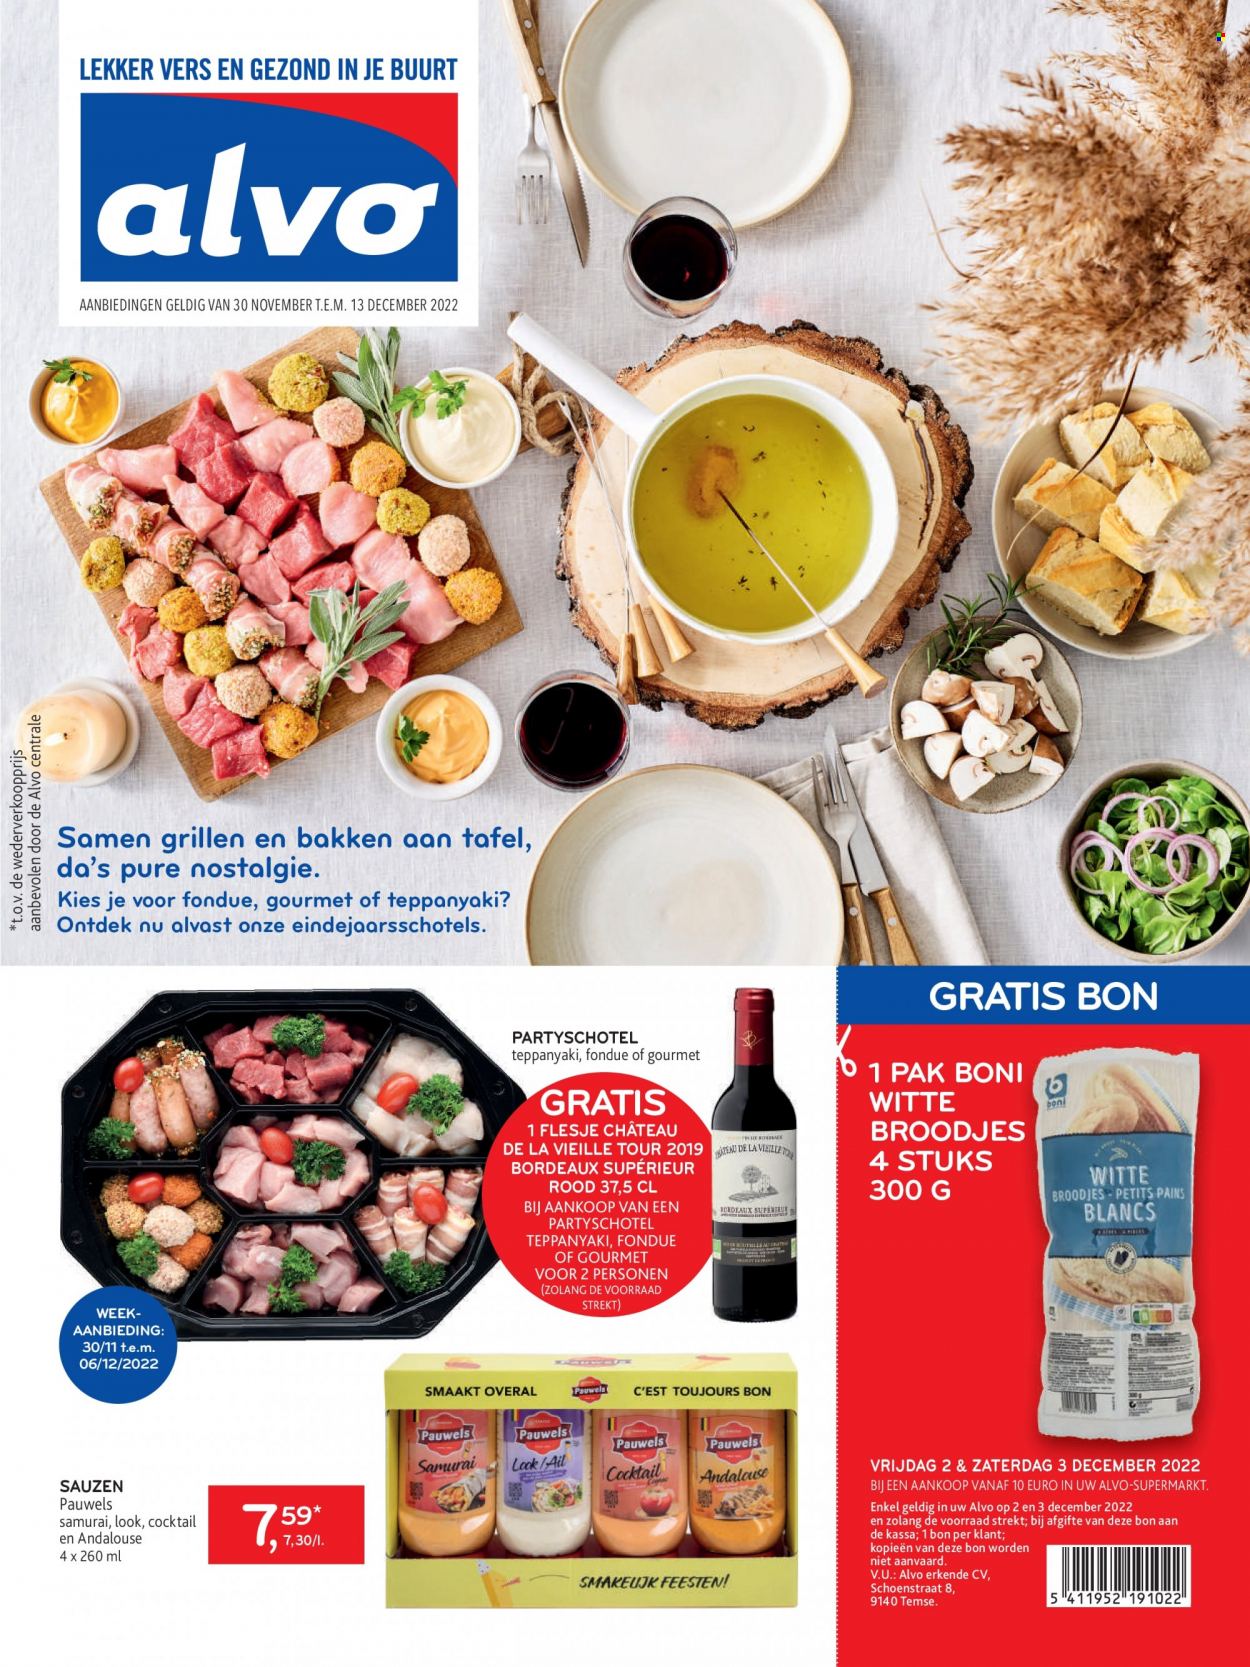 thumbnail - Alvo-aanbieding - 30/11/2022 - 13/12/2022 -  producten in de aanbieding - broodje, Samurai, Bordeaux. Pagina 1.